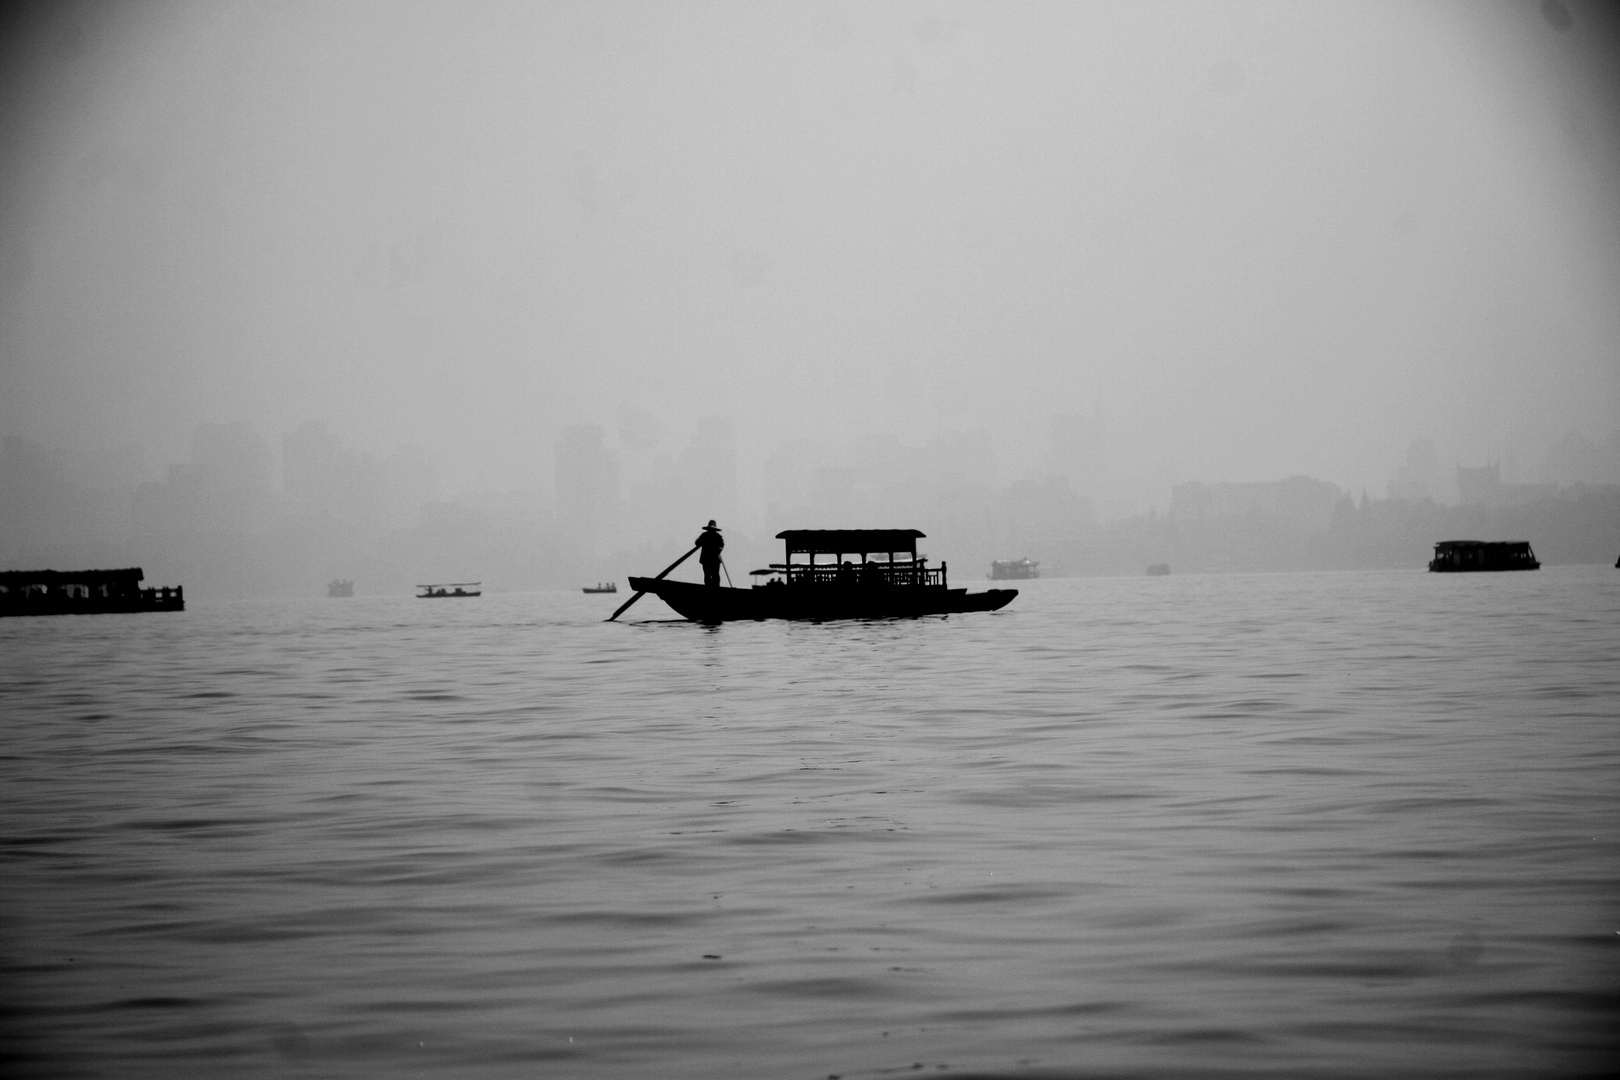 On the Lake (Hangzhou)